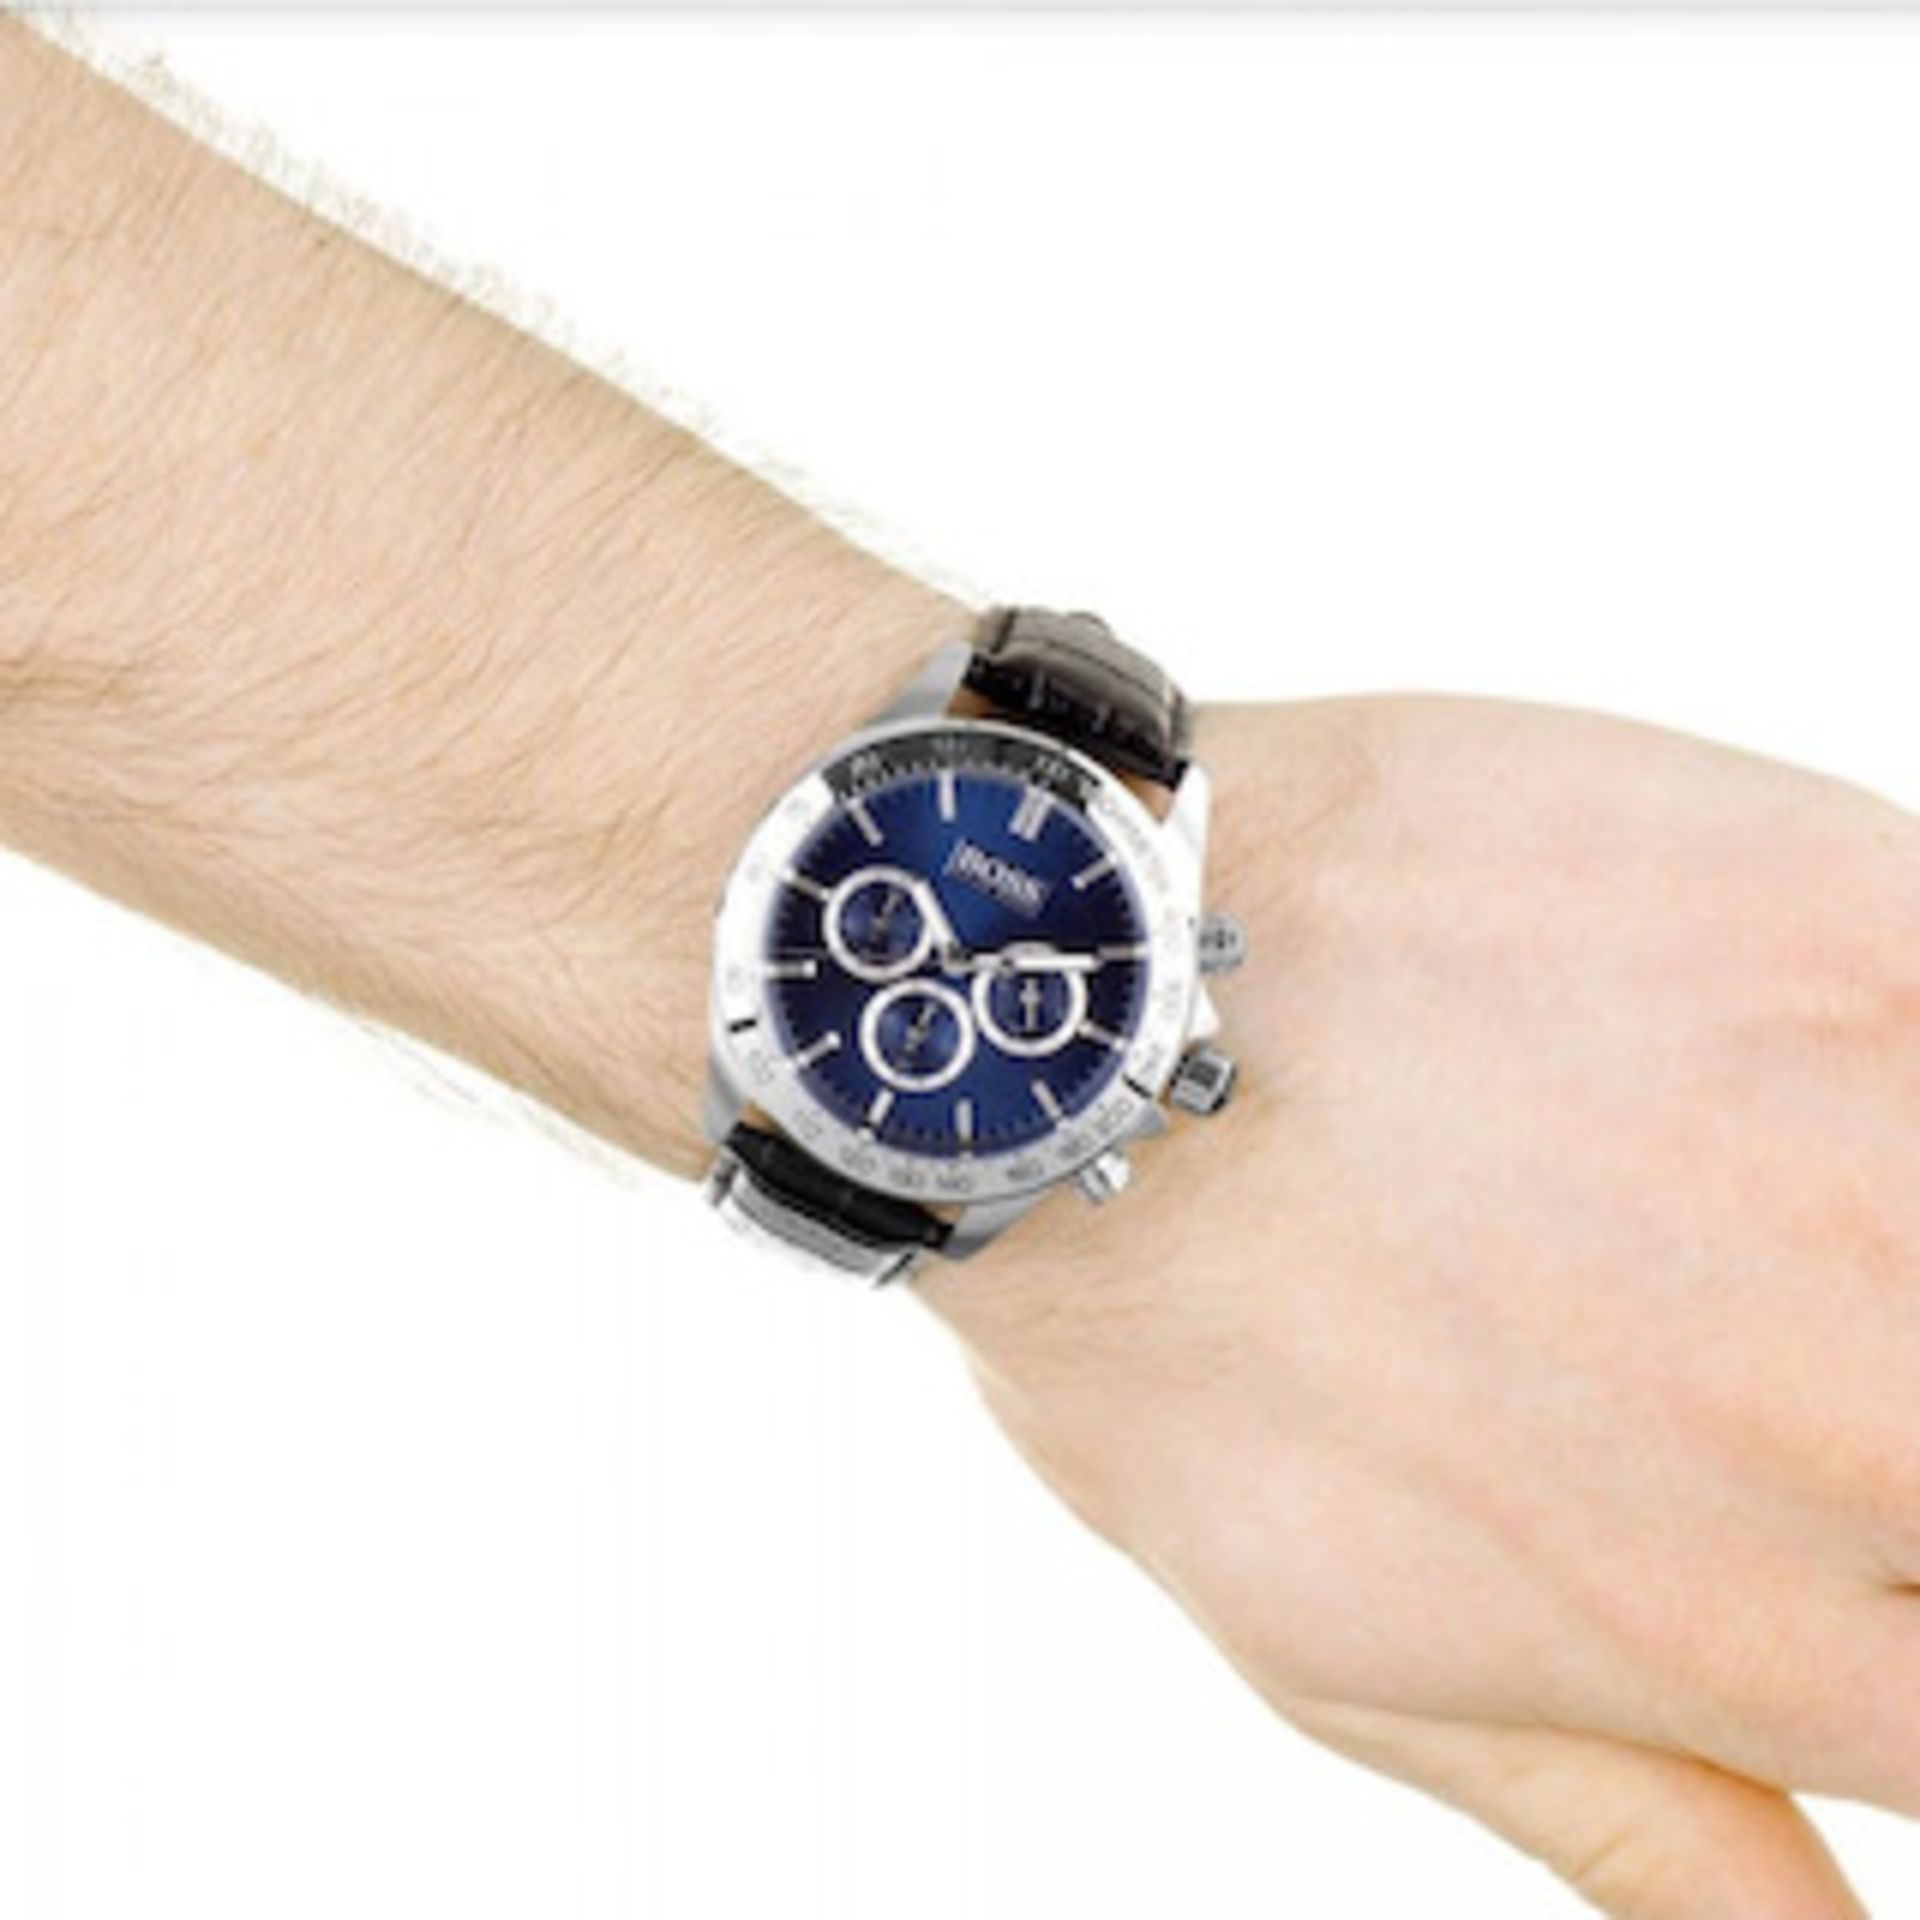 Hugo Boss 1513176 Men's Ikon Blue Dial Black Leather Strap Chronograph Watch - Image 4 of 5